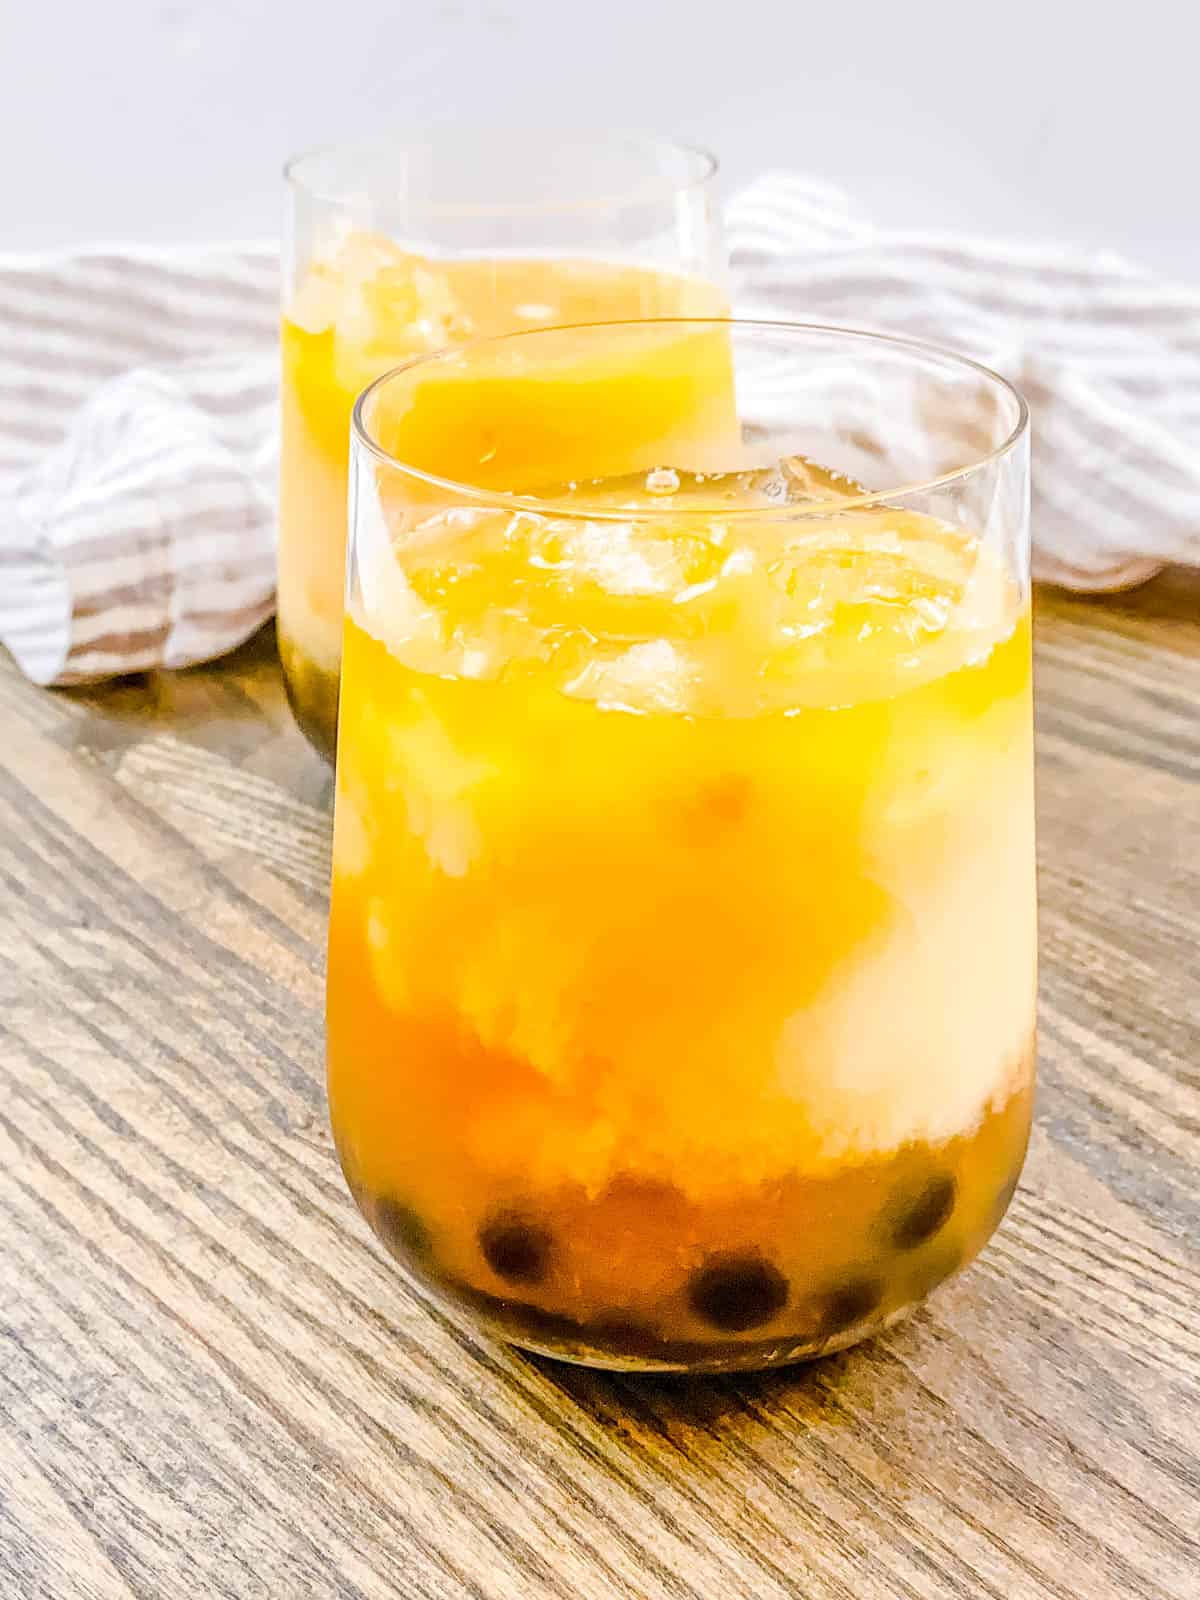 Wintermelon boba tea in a glass with ice.